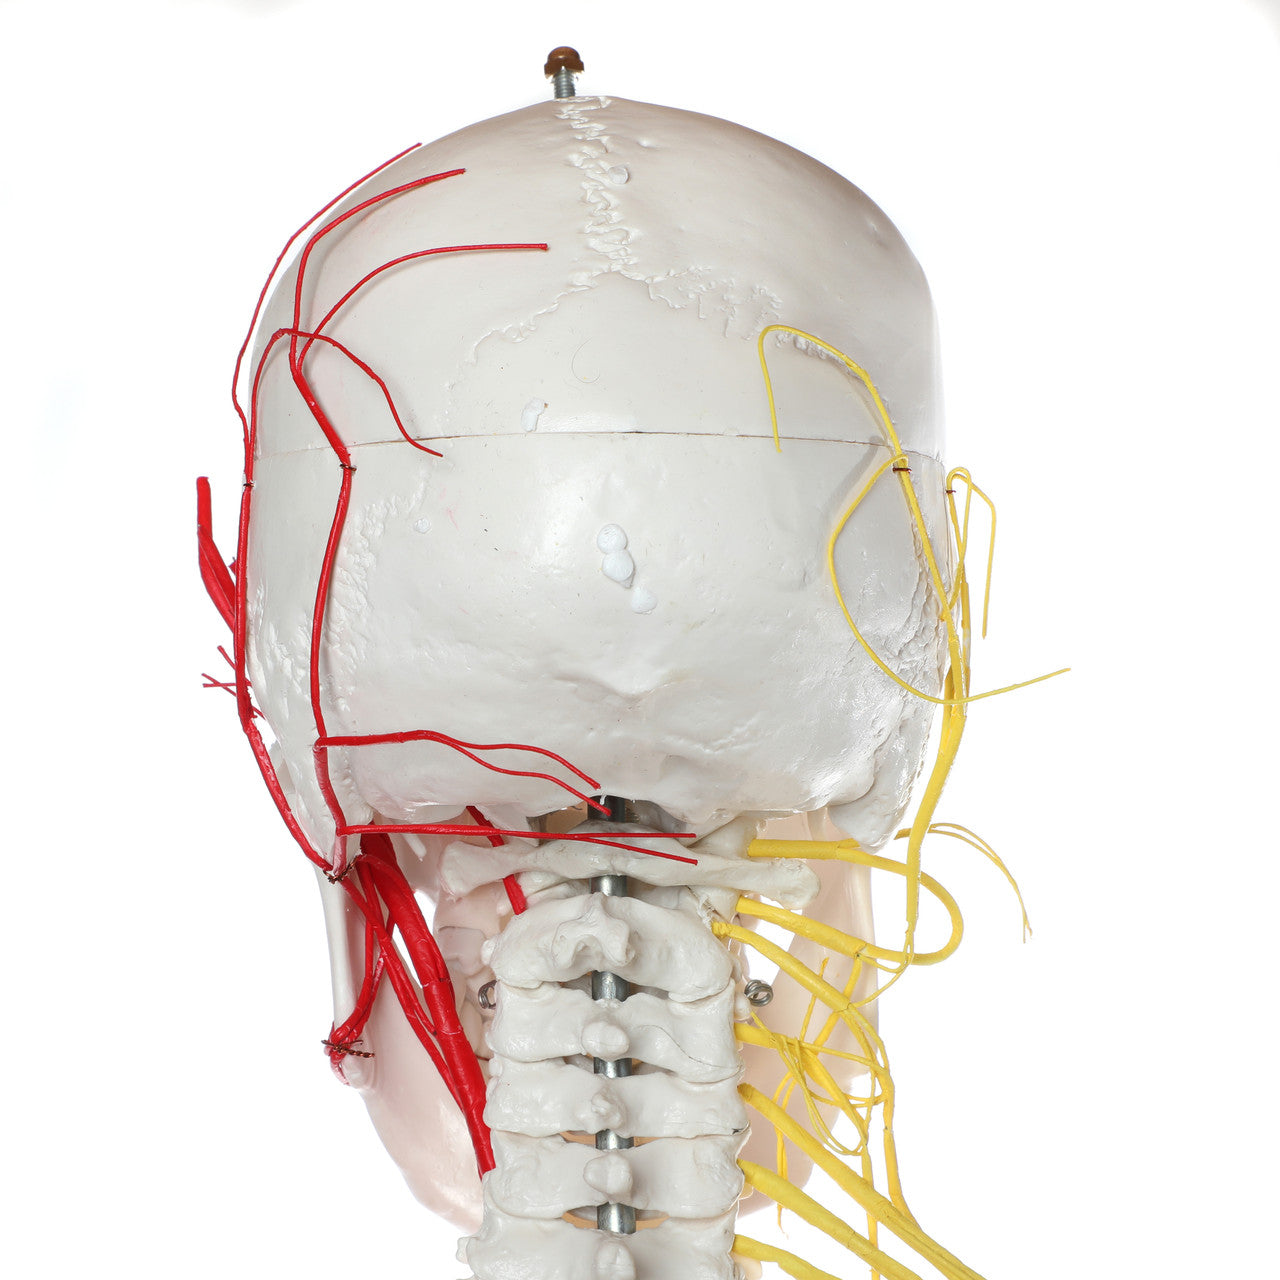 Evotech Scientific Life Size Human Skeleton W/ Nerves and Vesseles, 170cm